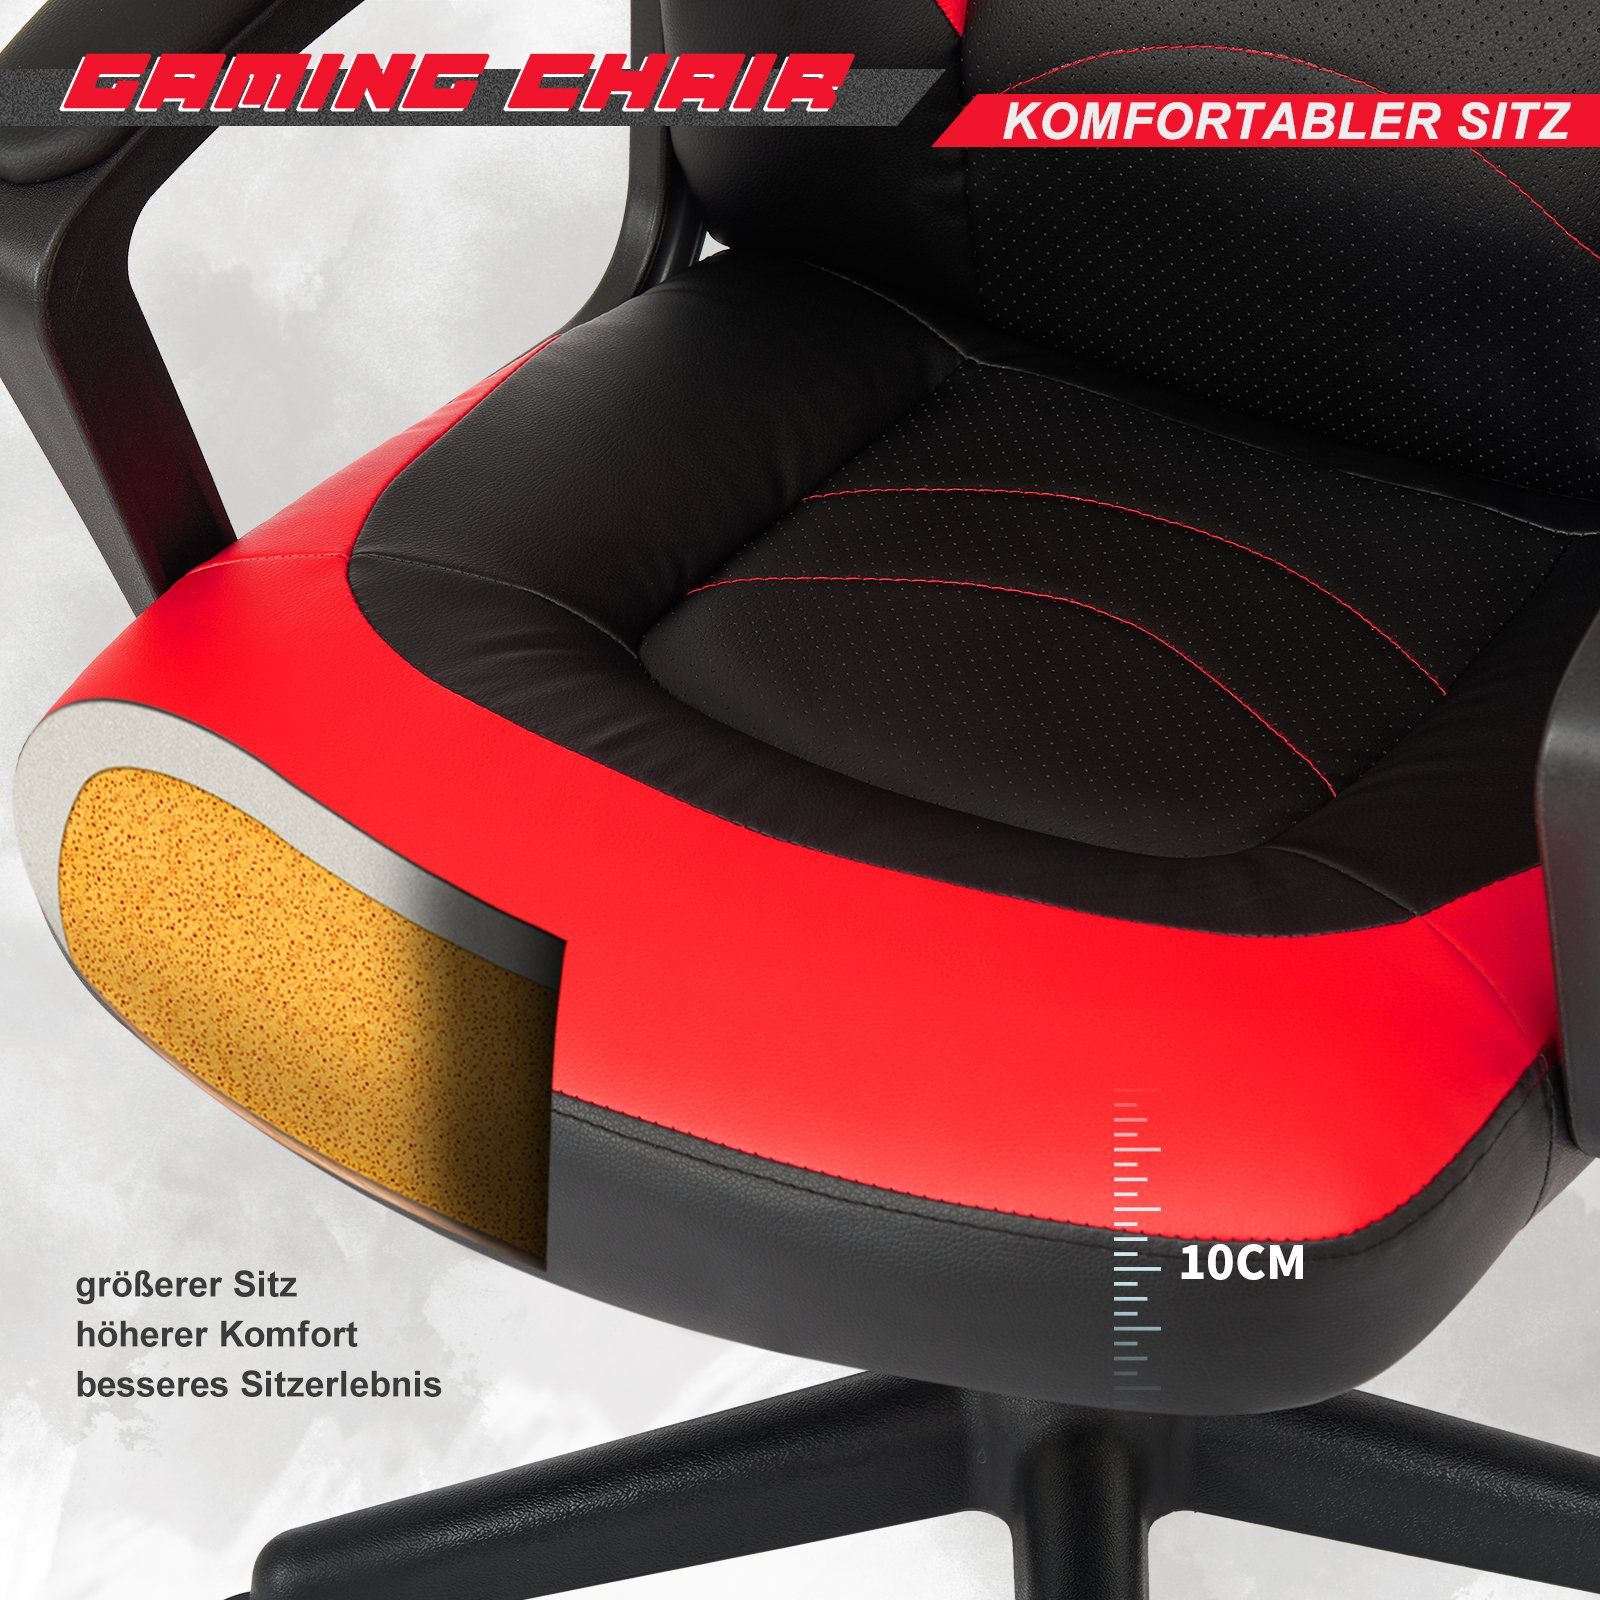 rot Intimate Office Gaming Home WM Bürostuhl,Computerstuhl Chair Heart